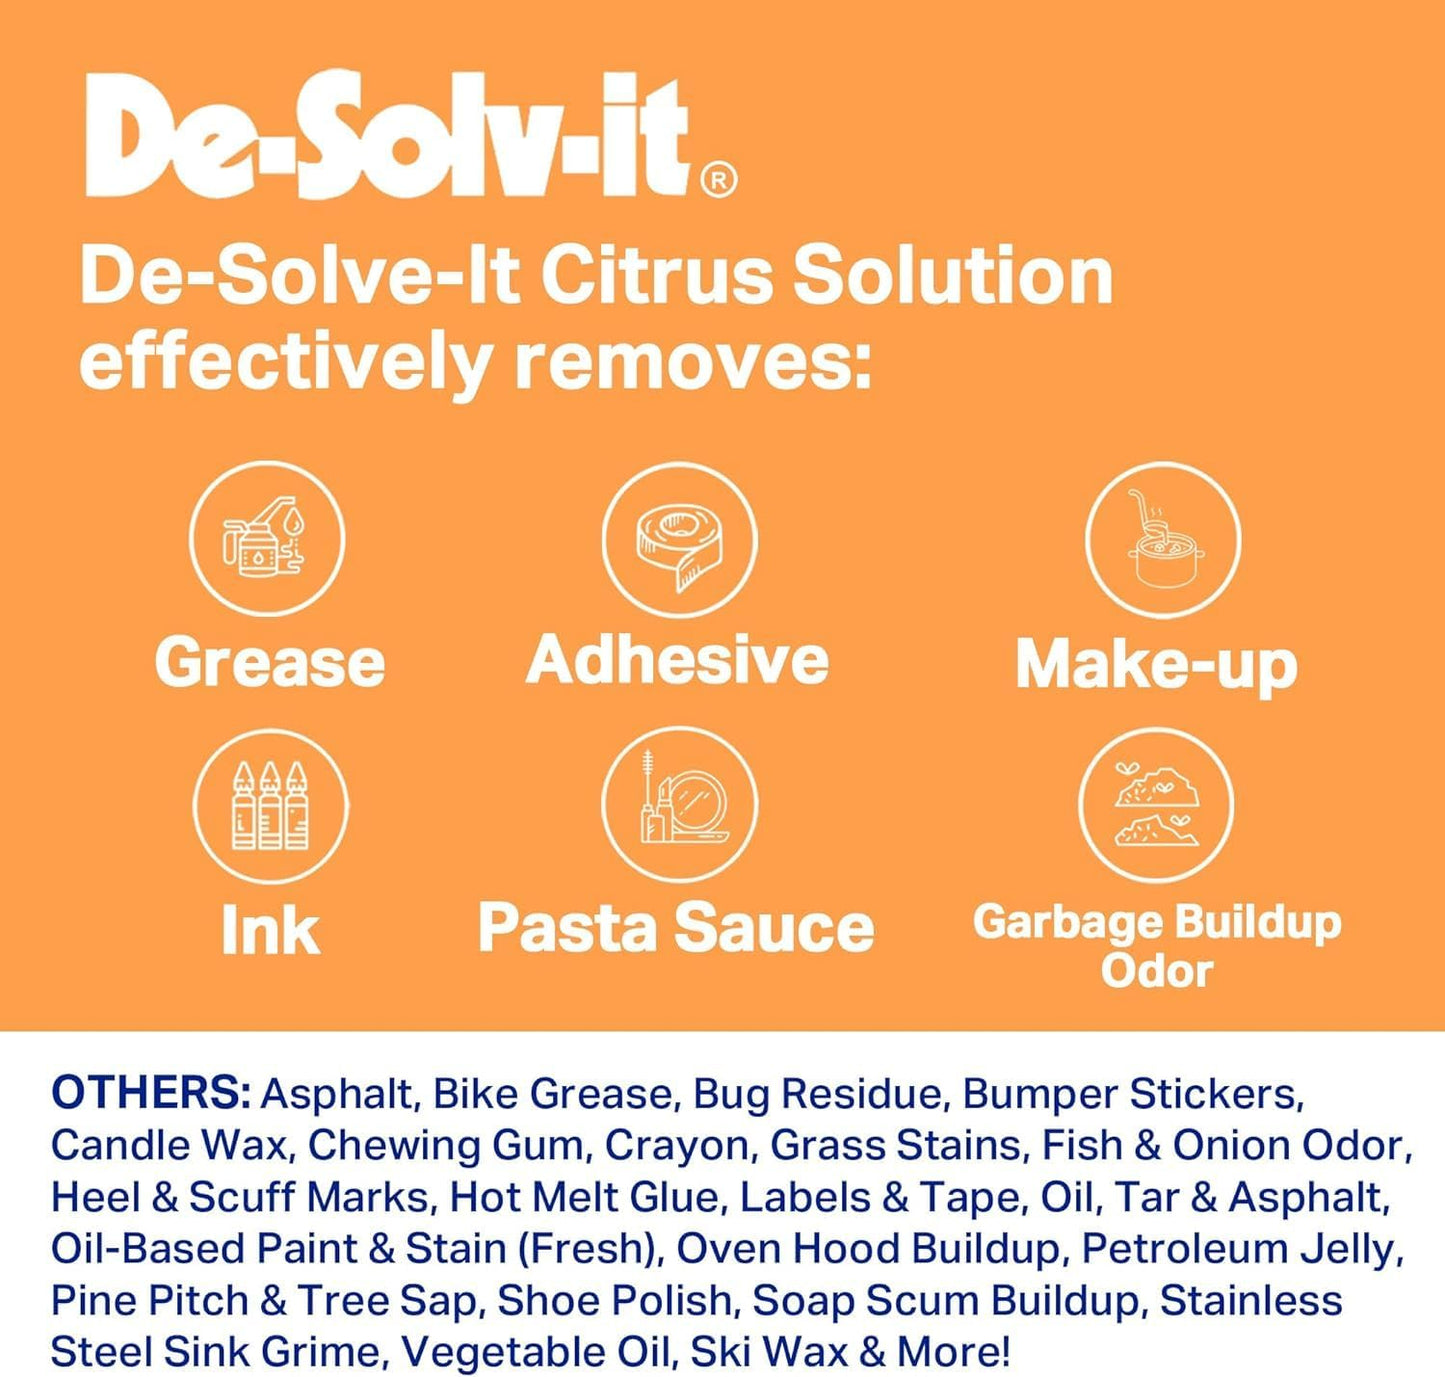 De-Solv-it! 10362 Orange Sol Citrus Solution Container, 1 Gallon 1-Pack Brand: De-Solv-it